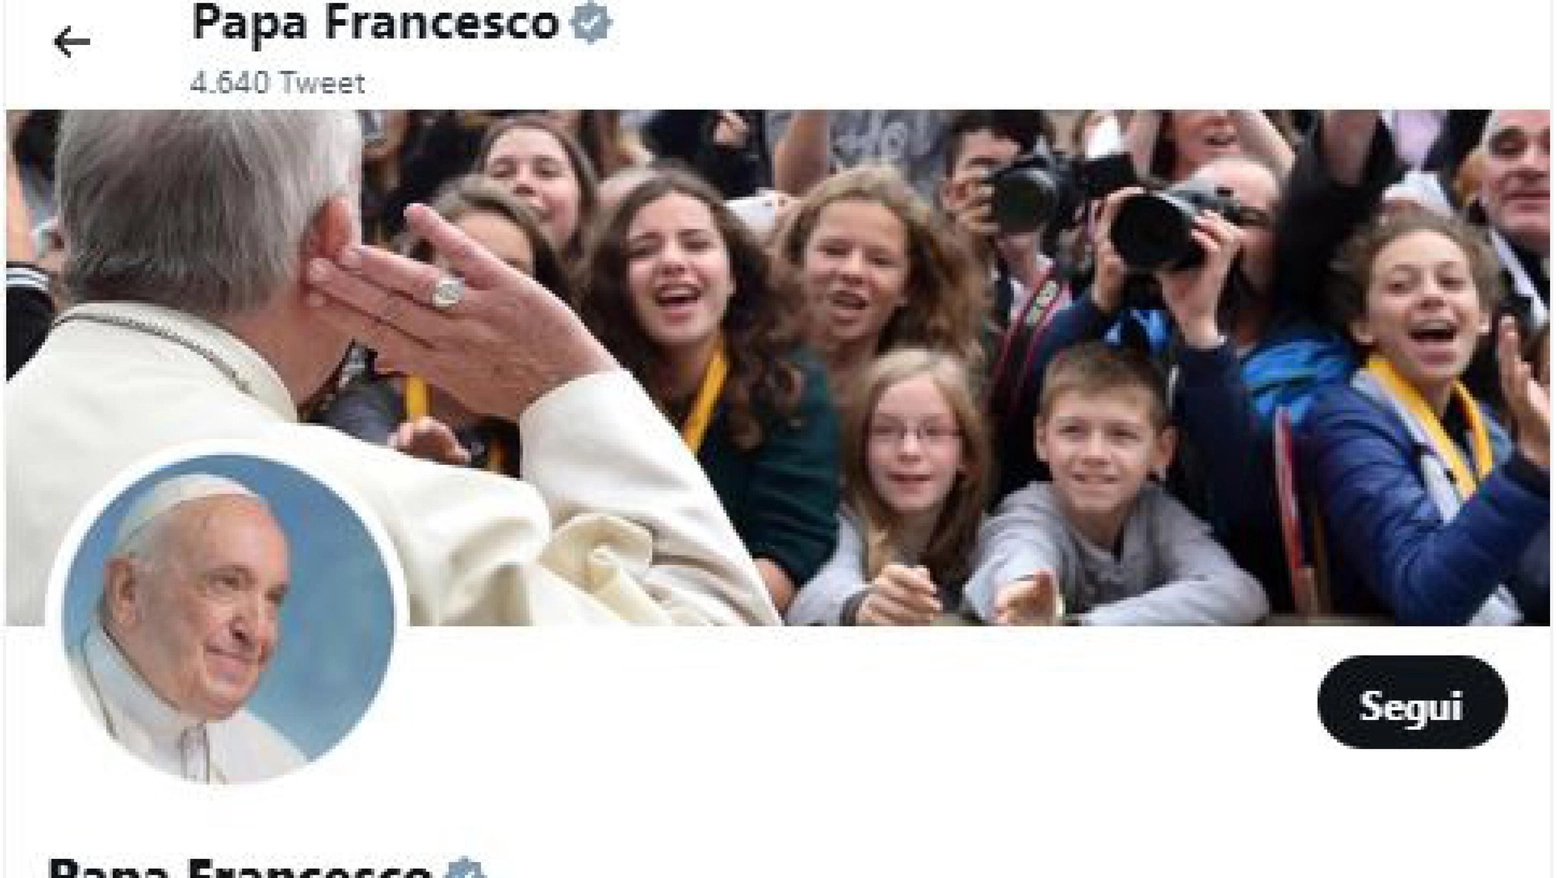 L'account del Papa su Twitter ha perso la spunta blu